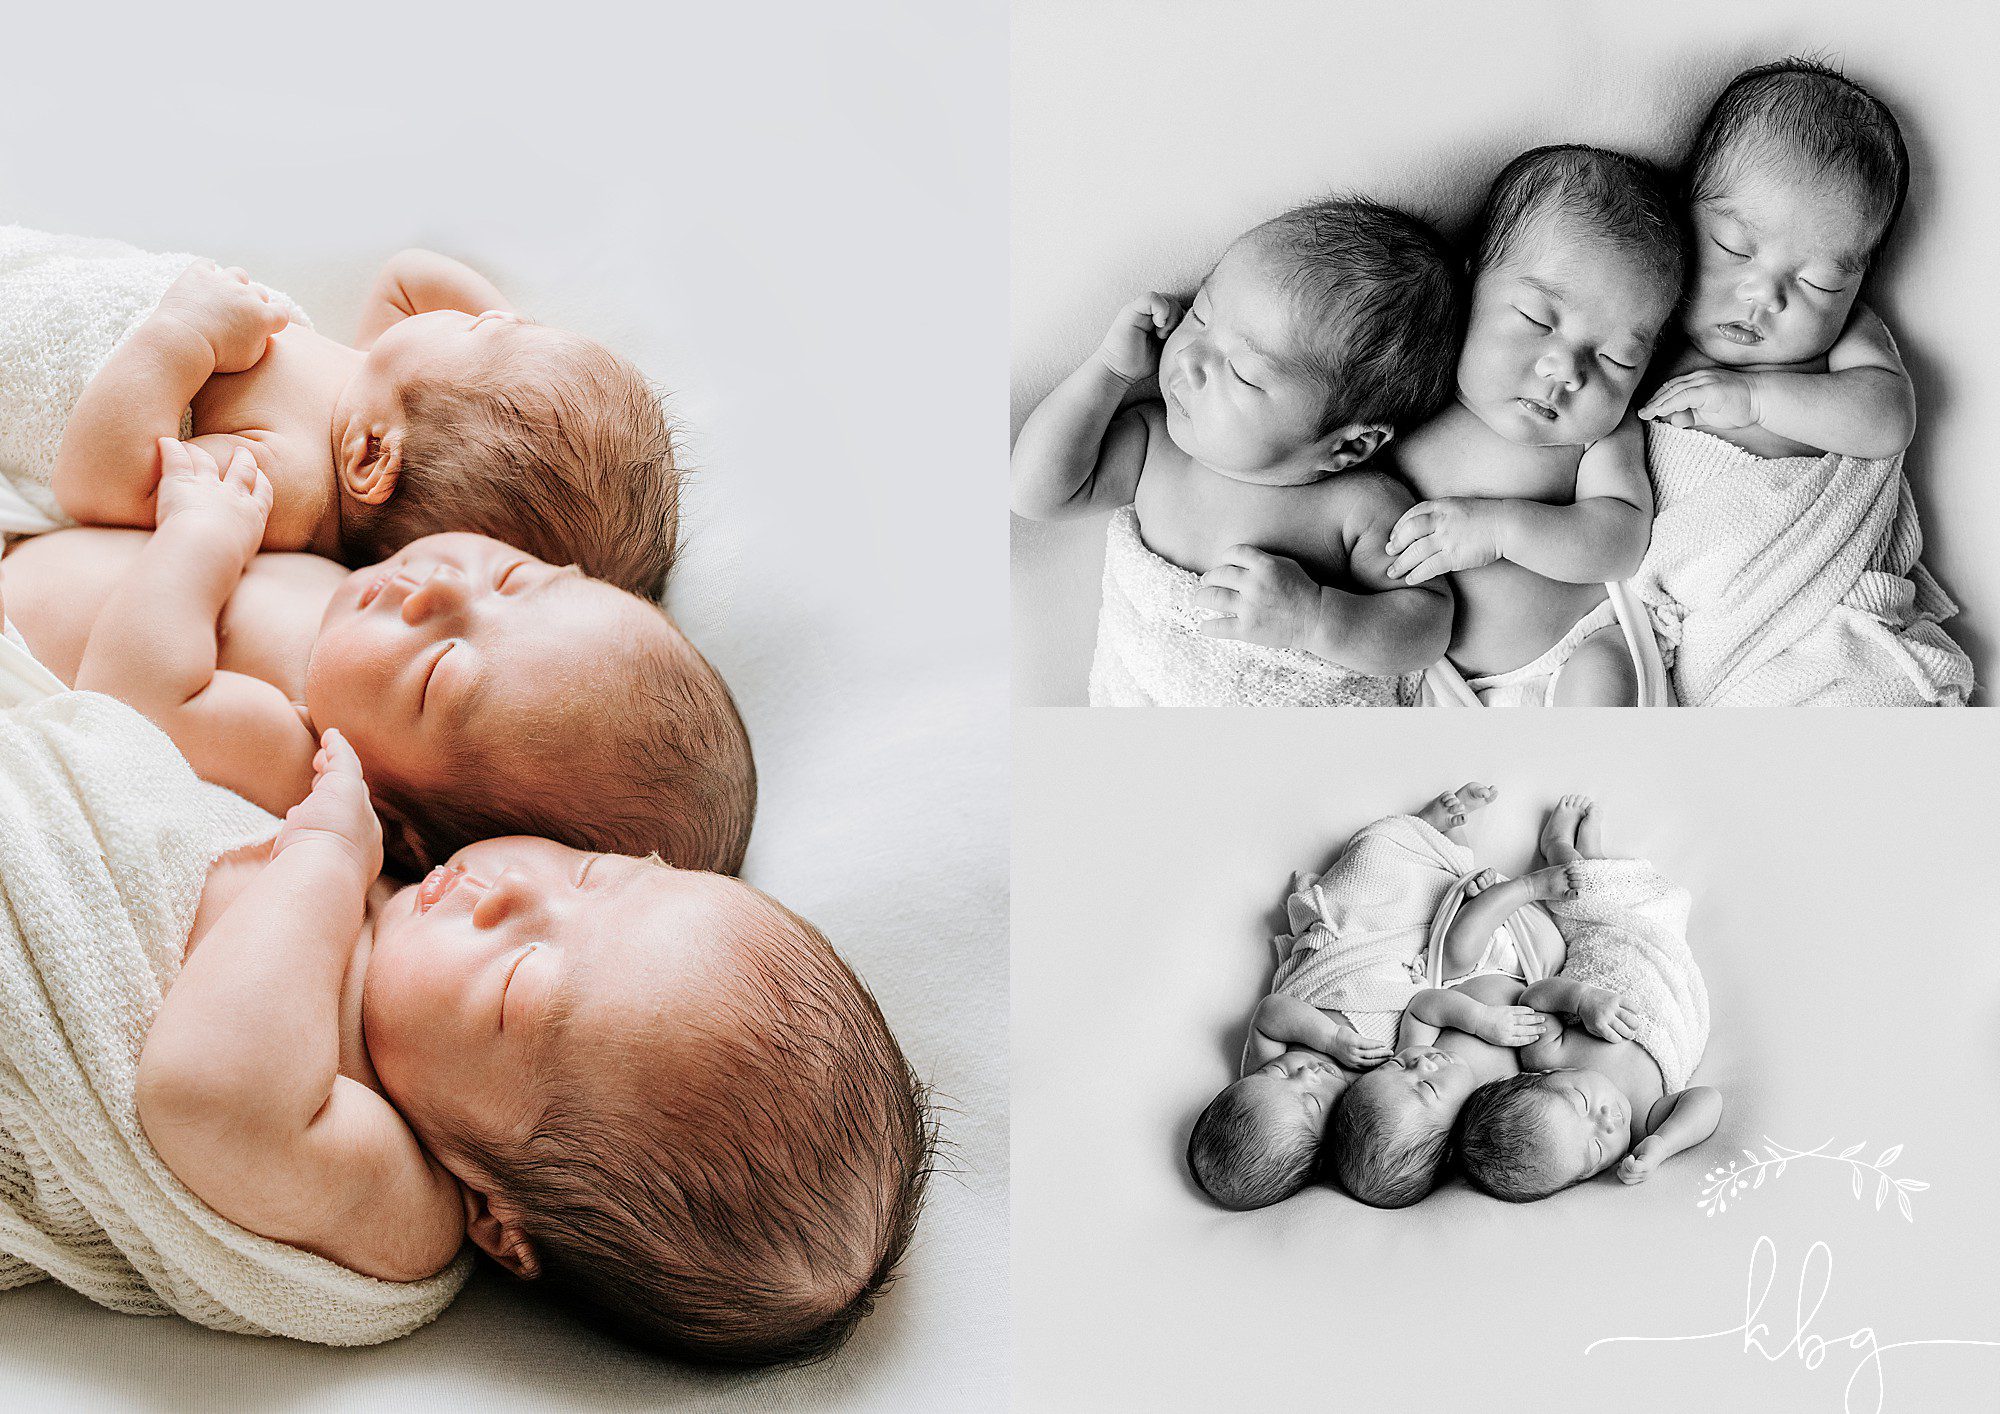 marietta newborn session - triplet newborn boys posing together on beanbag